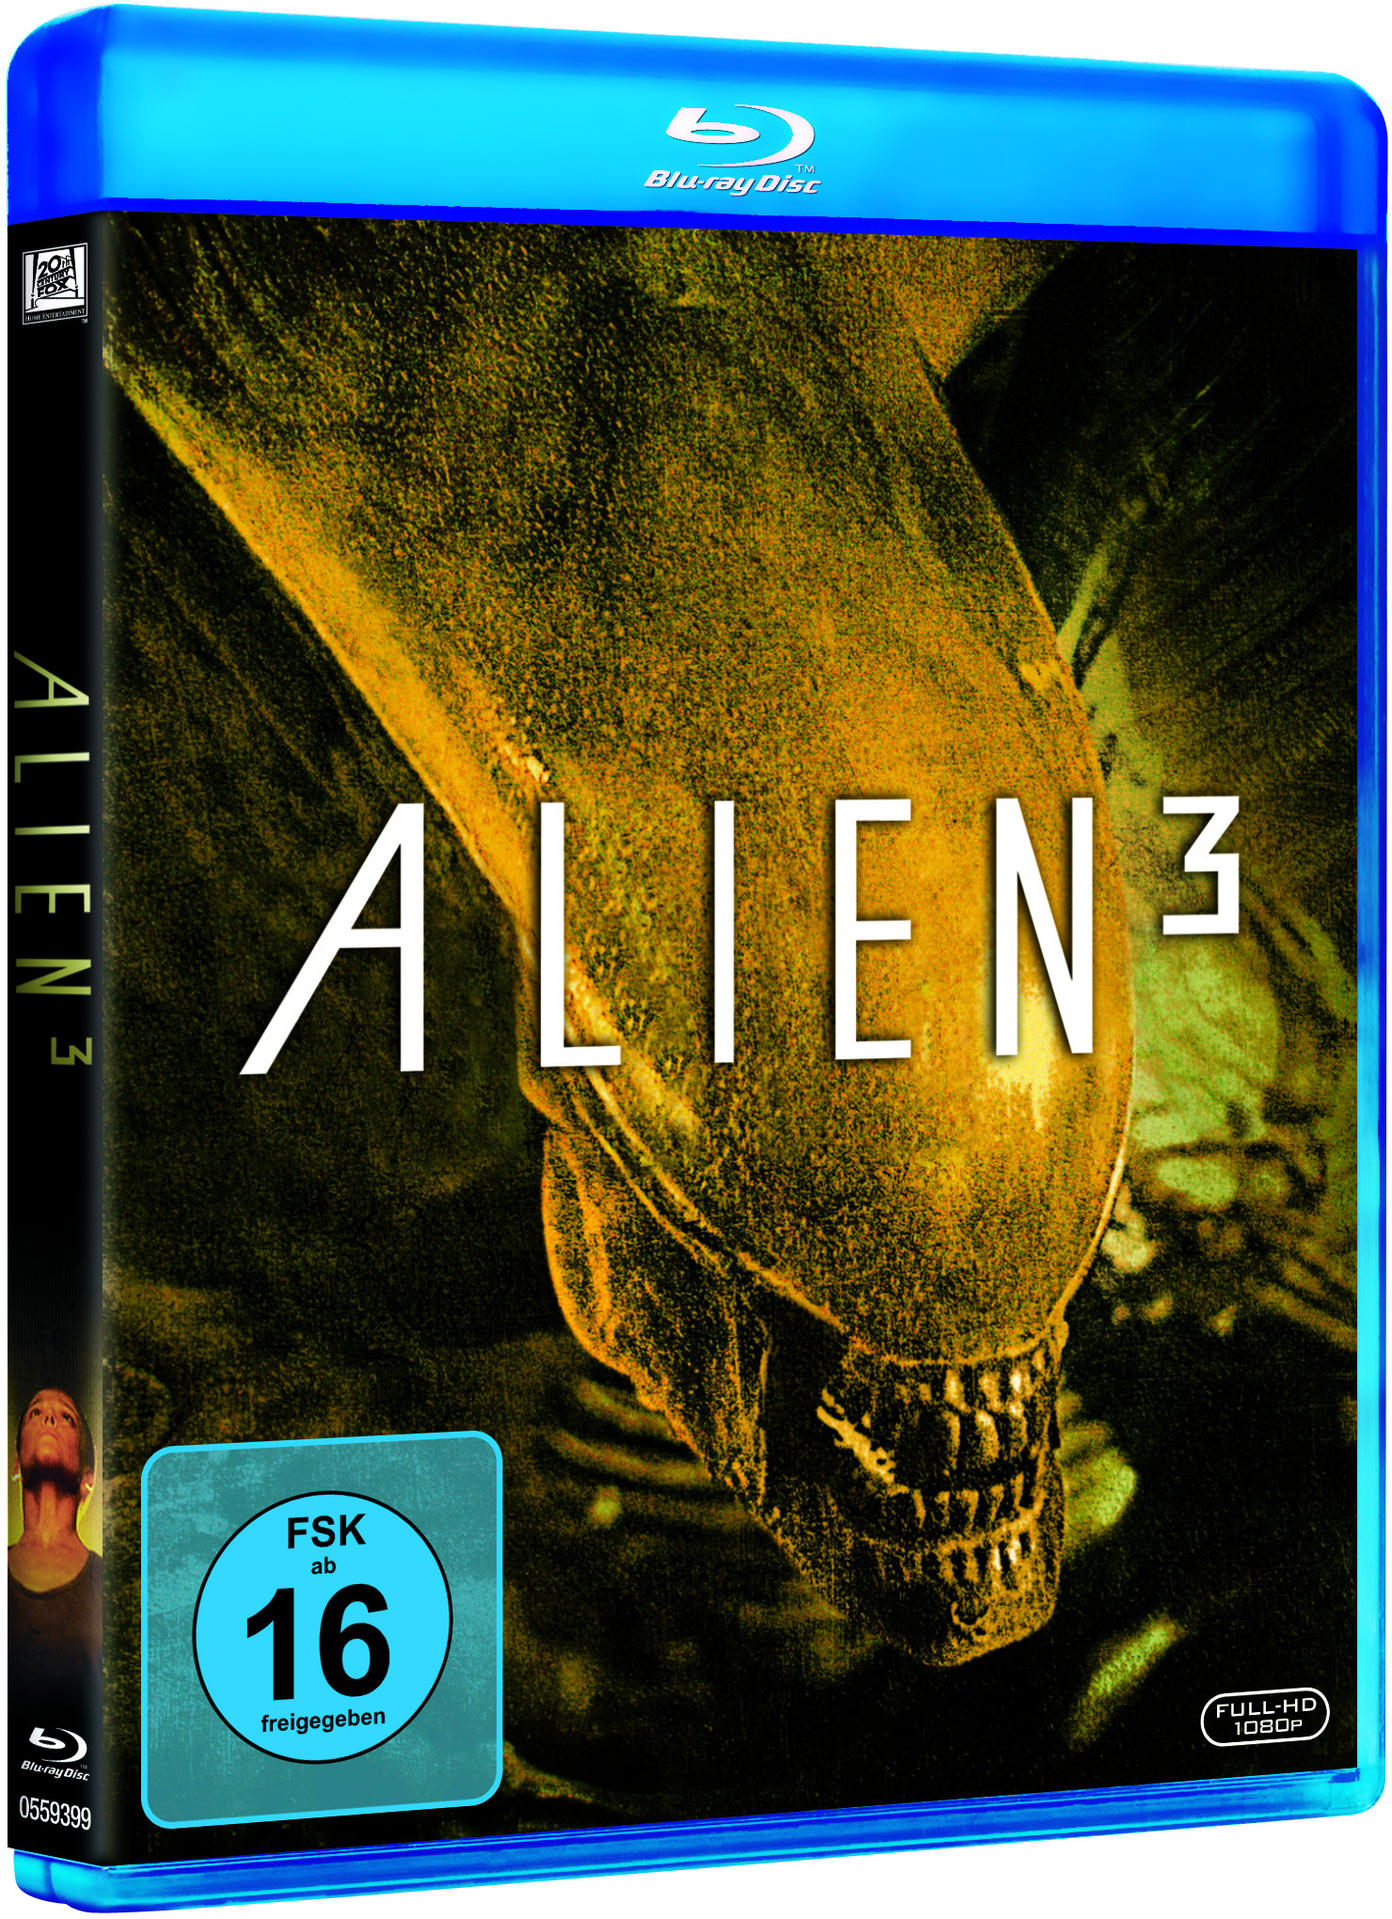 Special Blu-ray Edition - 3 Alien